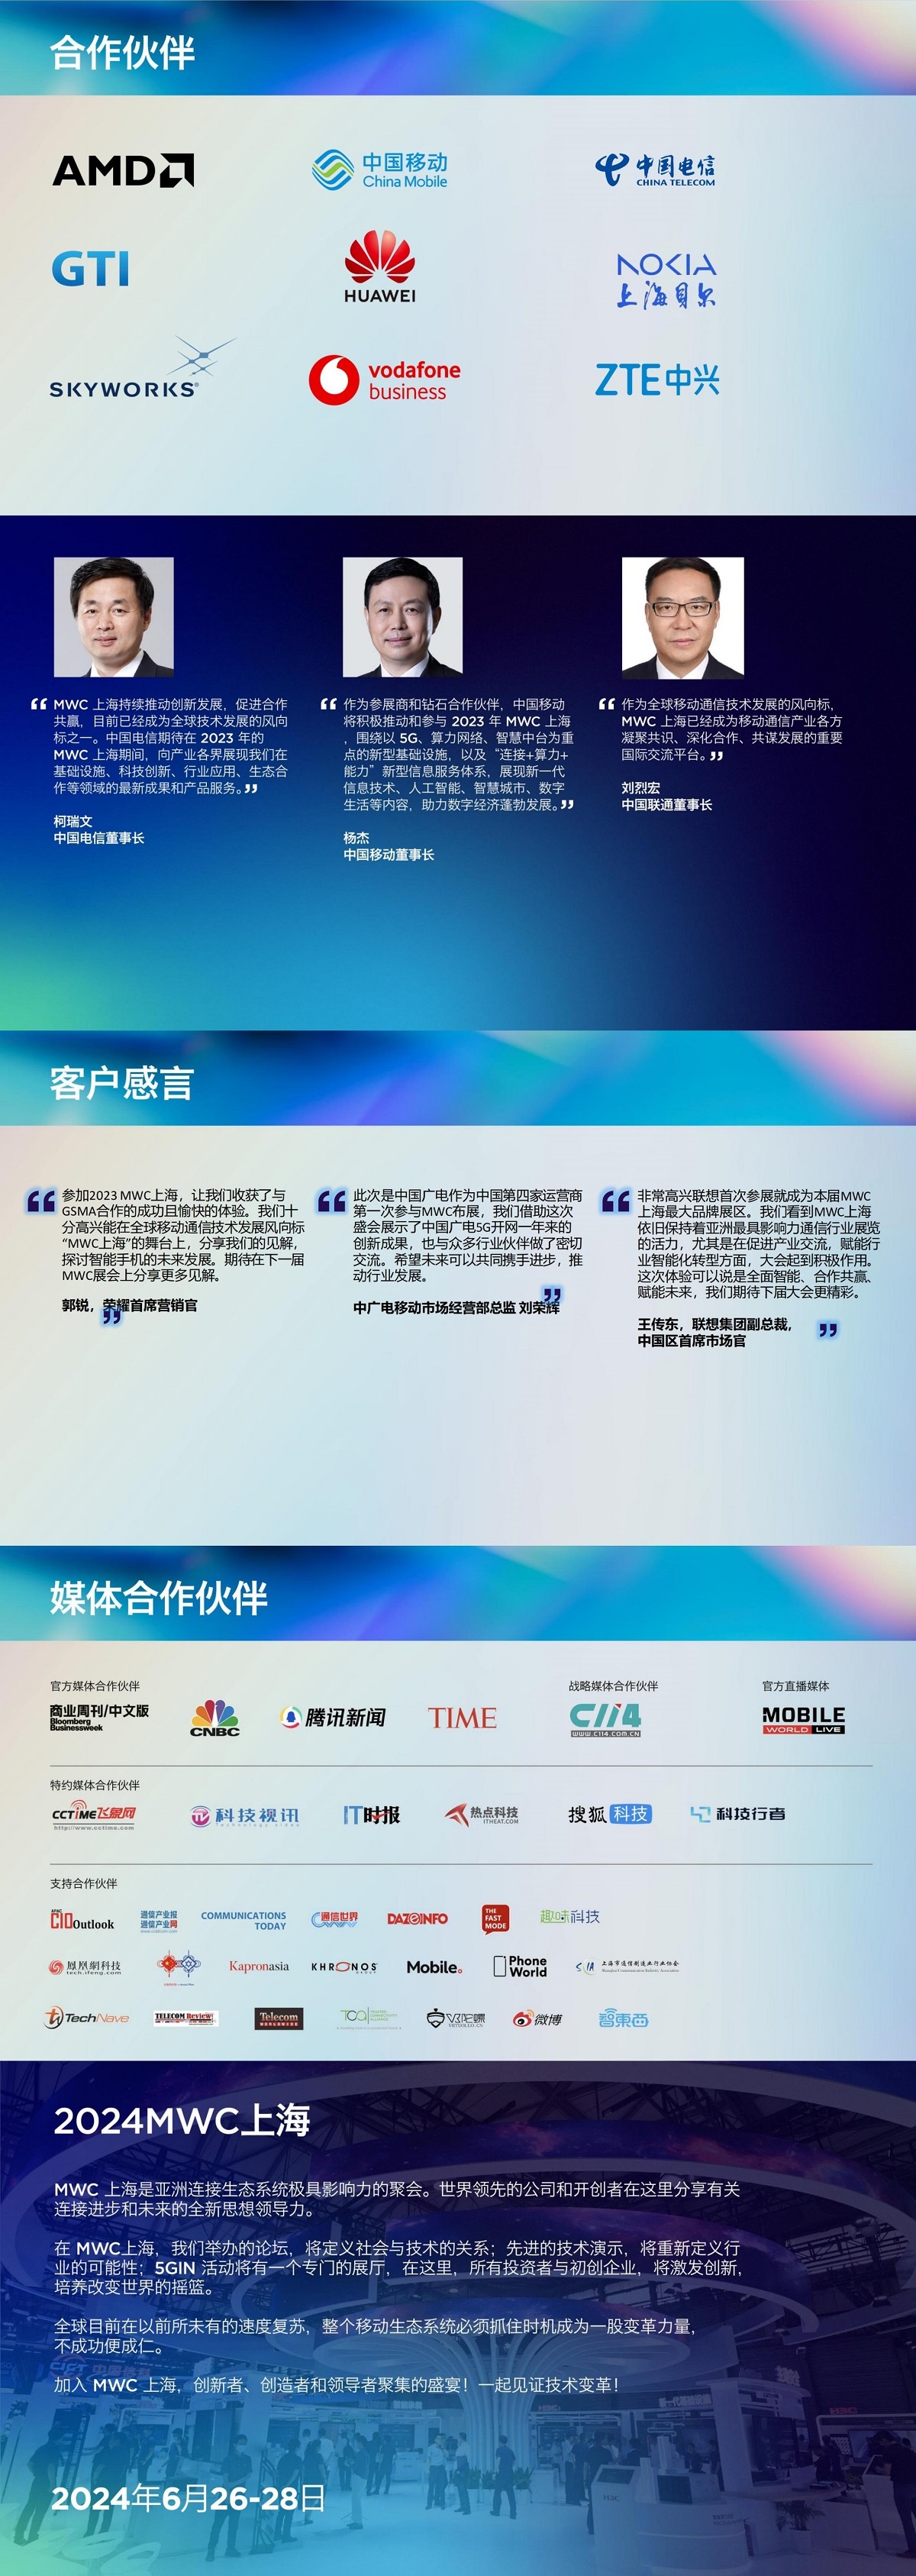 MWC23_Shanghai_Post_Event_Report_CHI_3.jpg